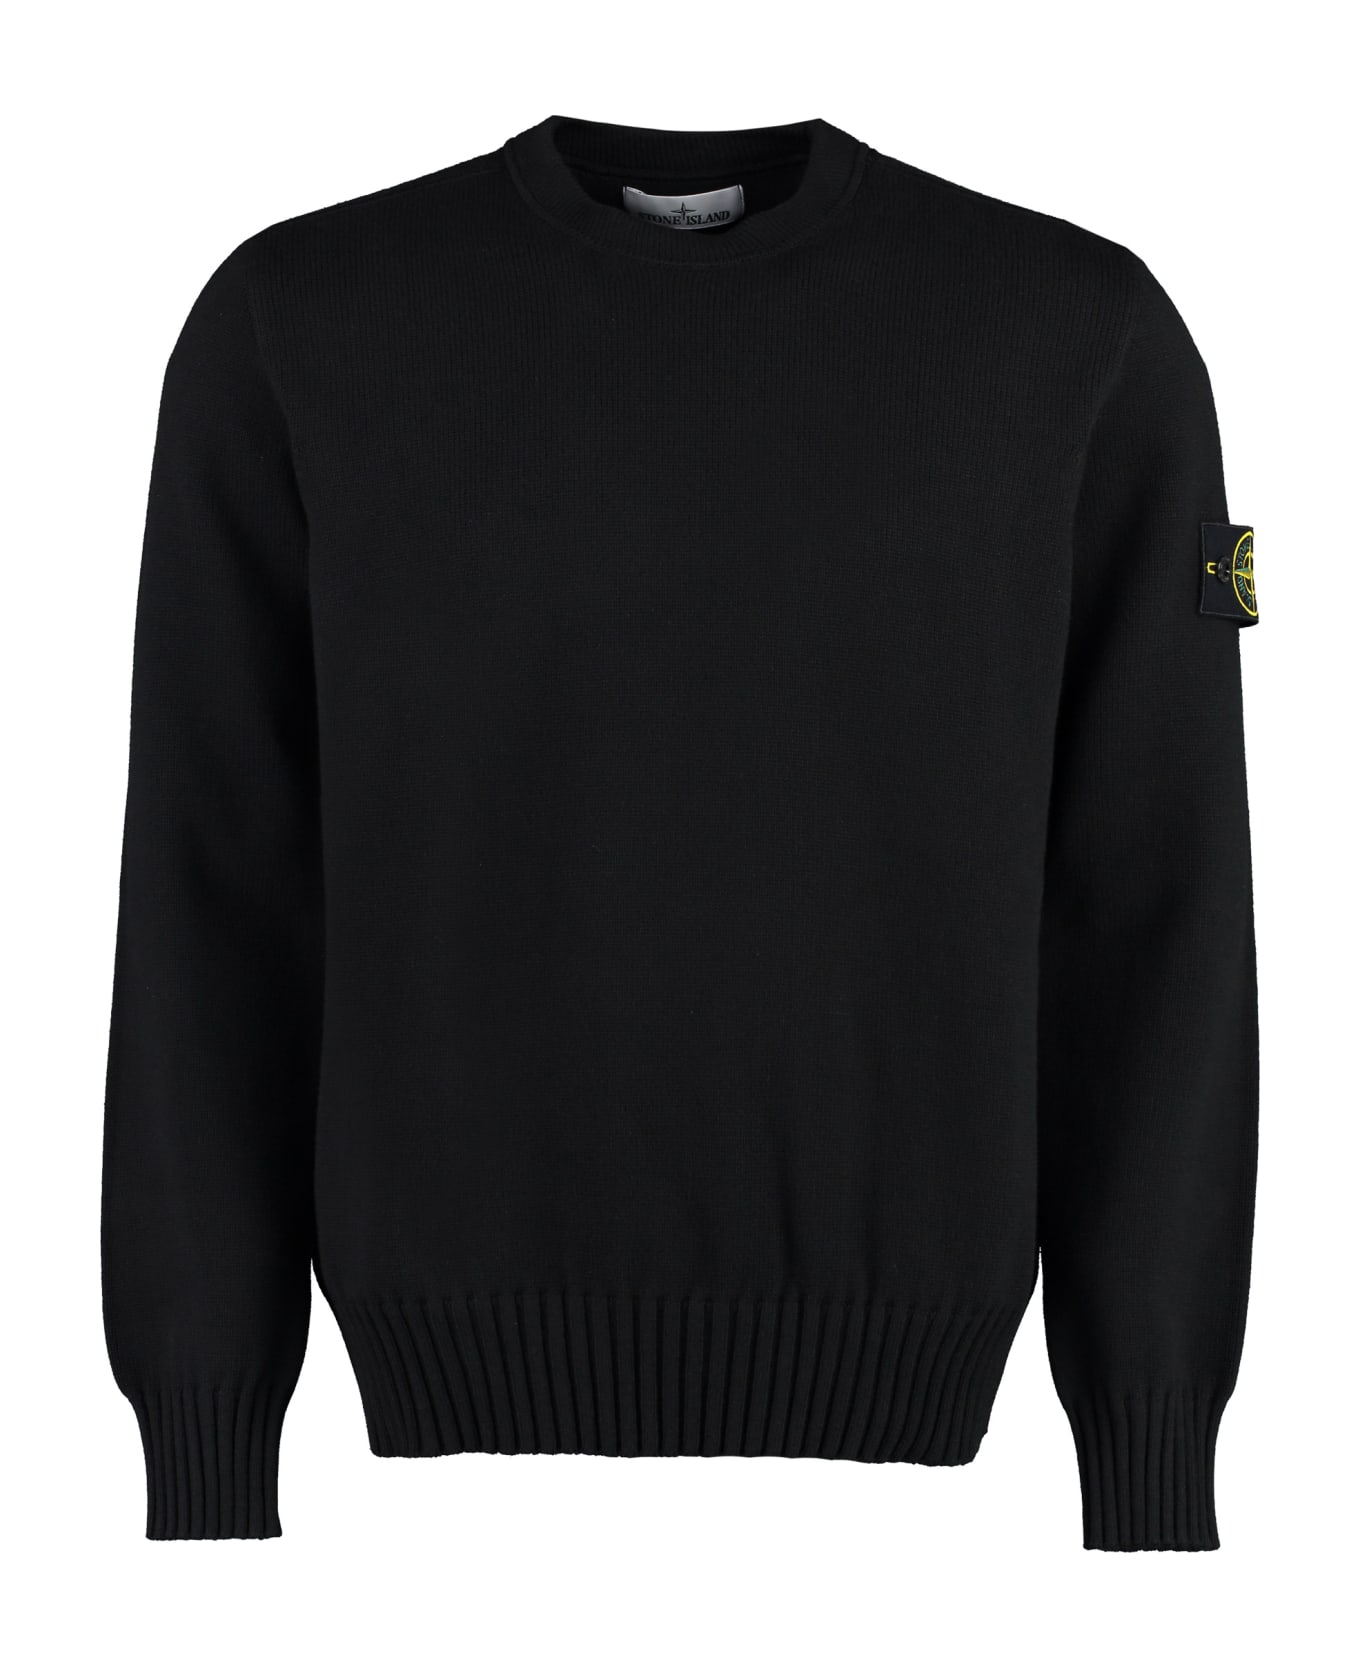 Stone Island Cotton Blend Crew-neck Sweater - black